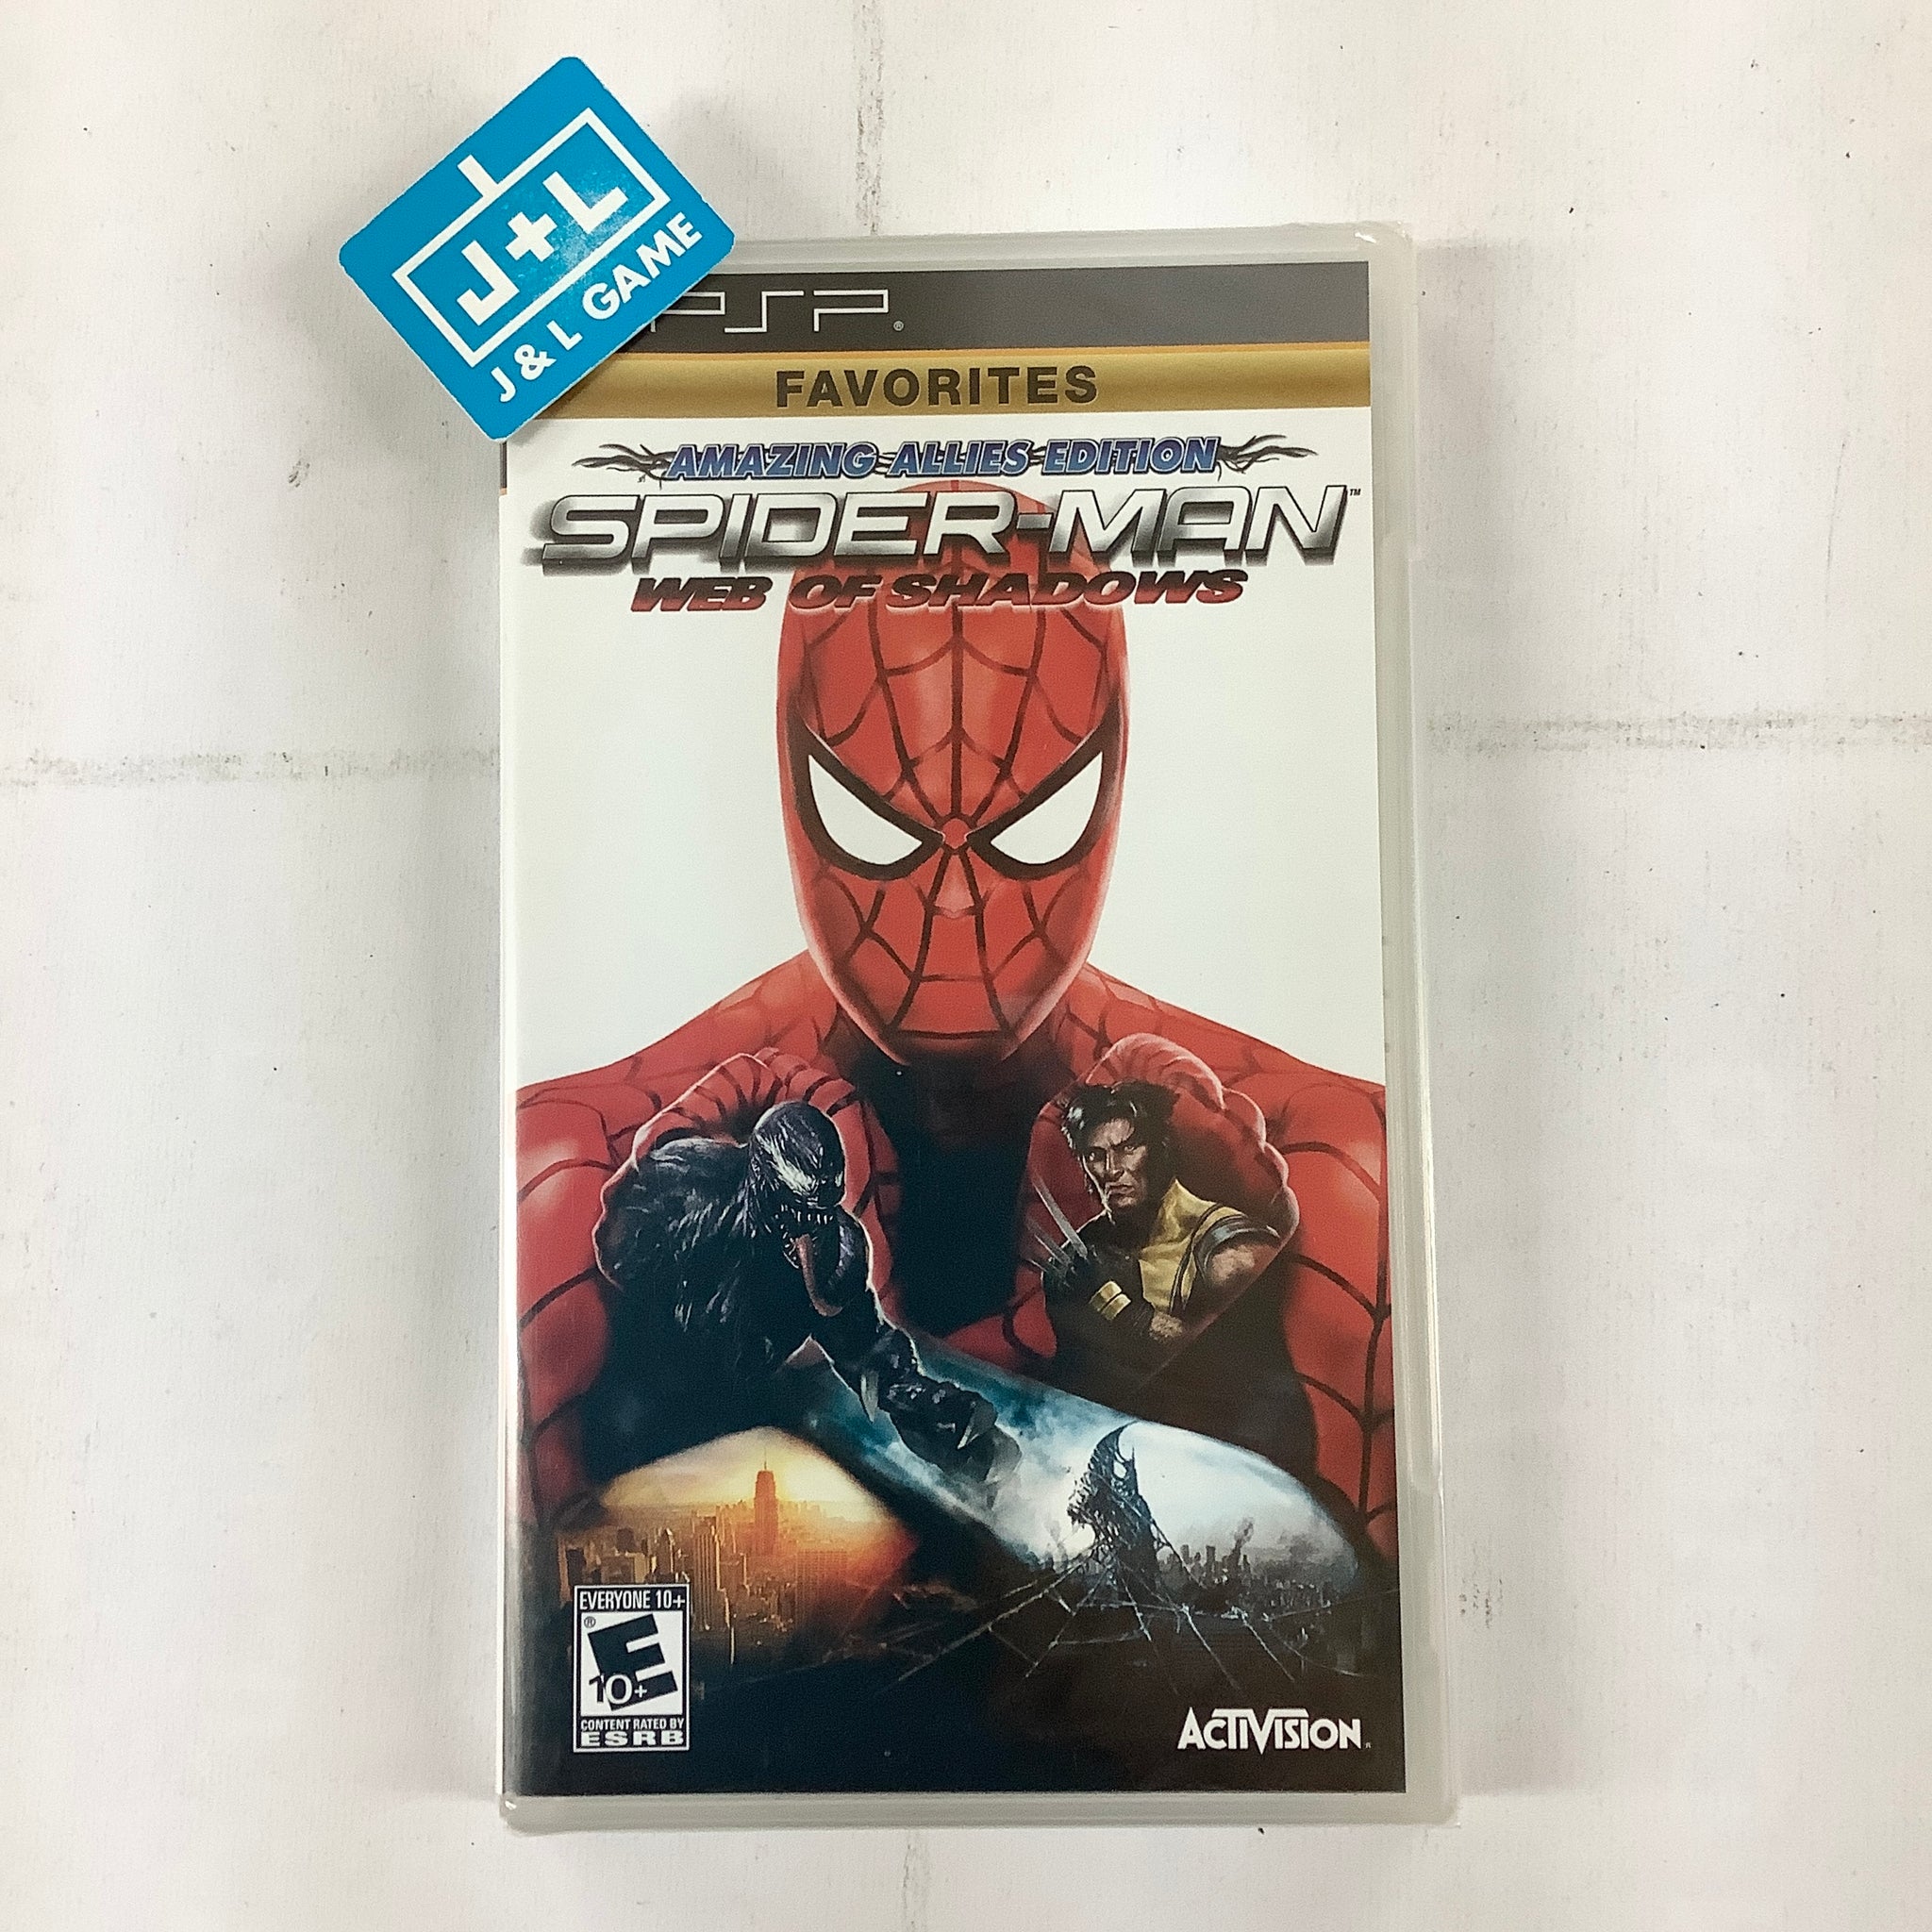 Spider-Man 2 & Spider-Man Web Of Shadows Sony PSP Activision